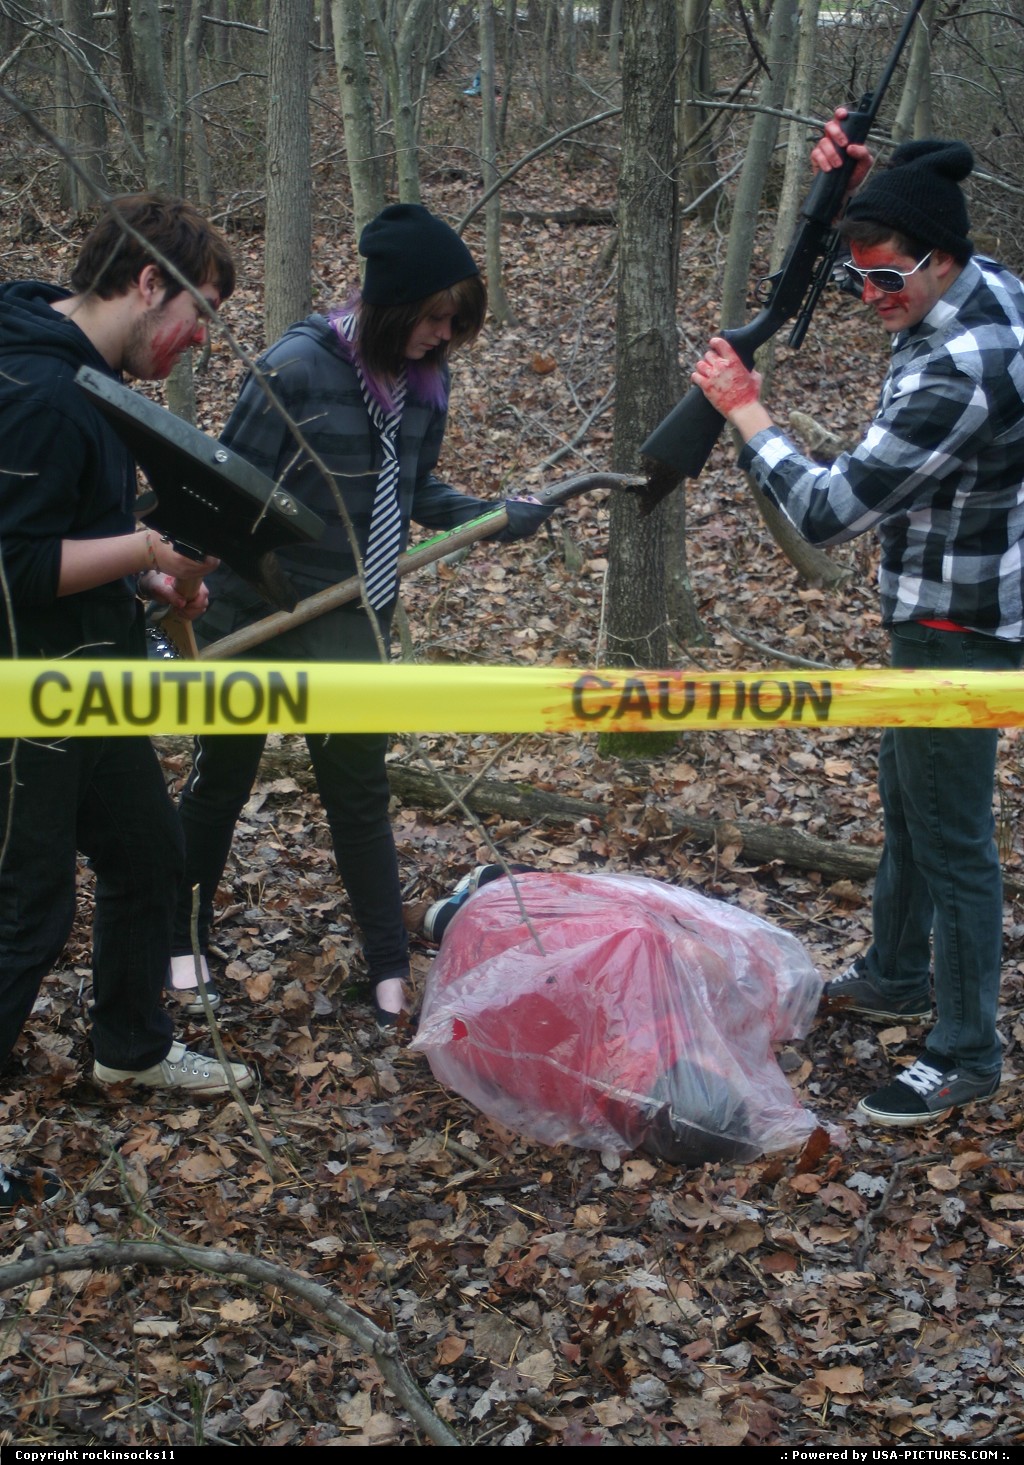 Picture by rockinsocks11: Glen Burnie Maryland   crime scene